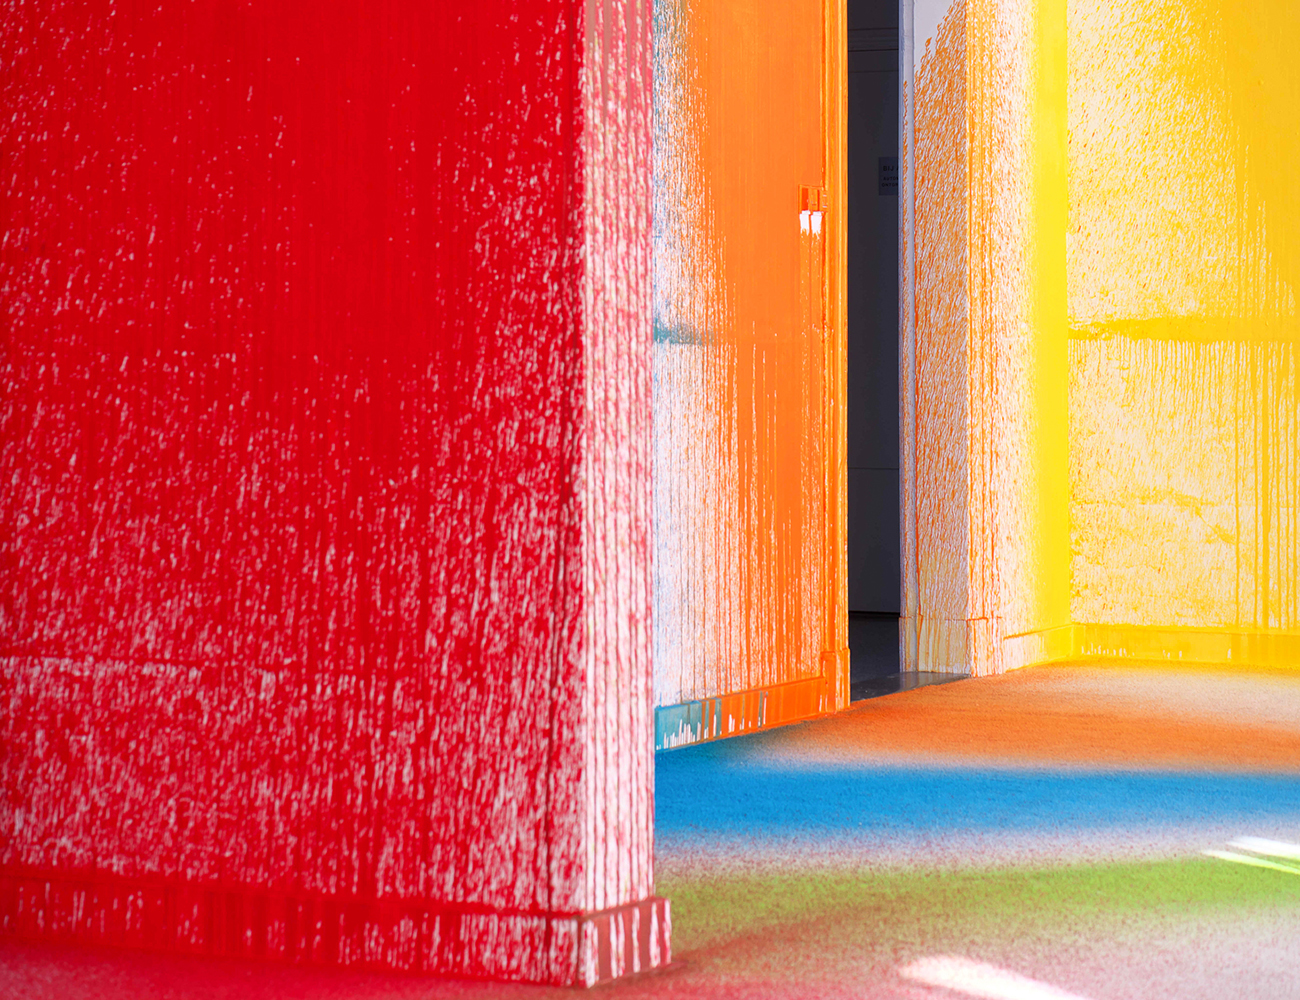 05 © Rutger de Vries, Color Disperser, 2019, Photo by Jan Tengbergen